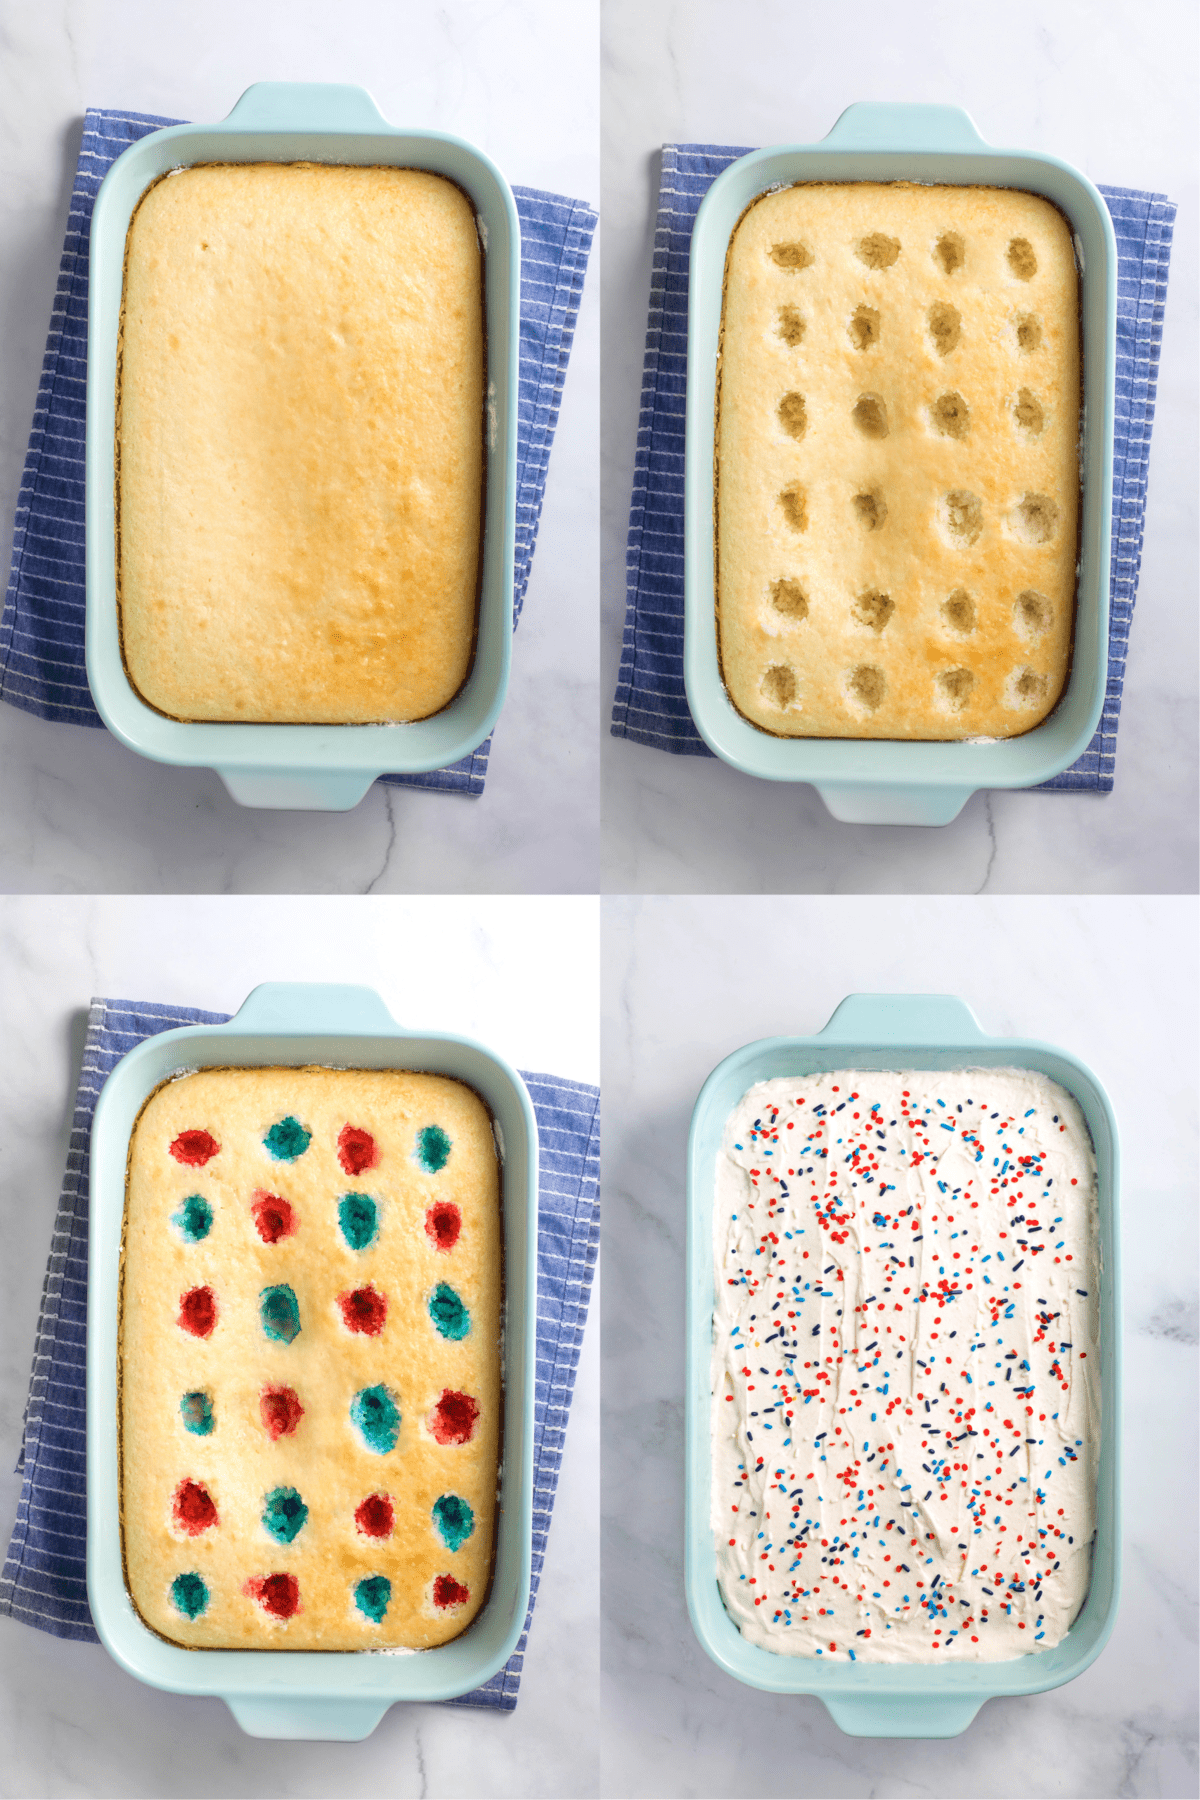 steps to make red, white and blue jello poke cake